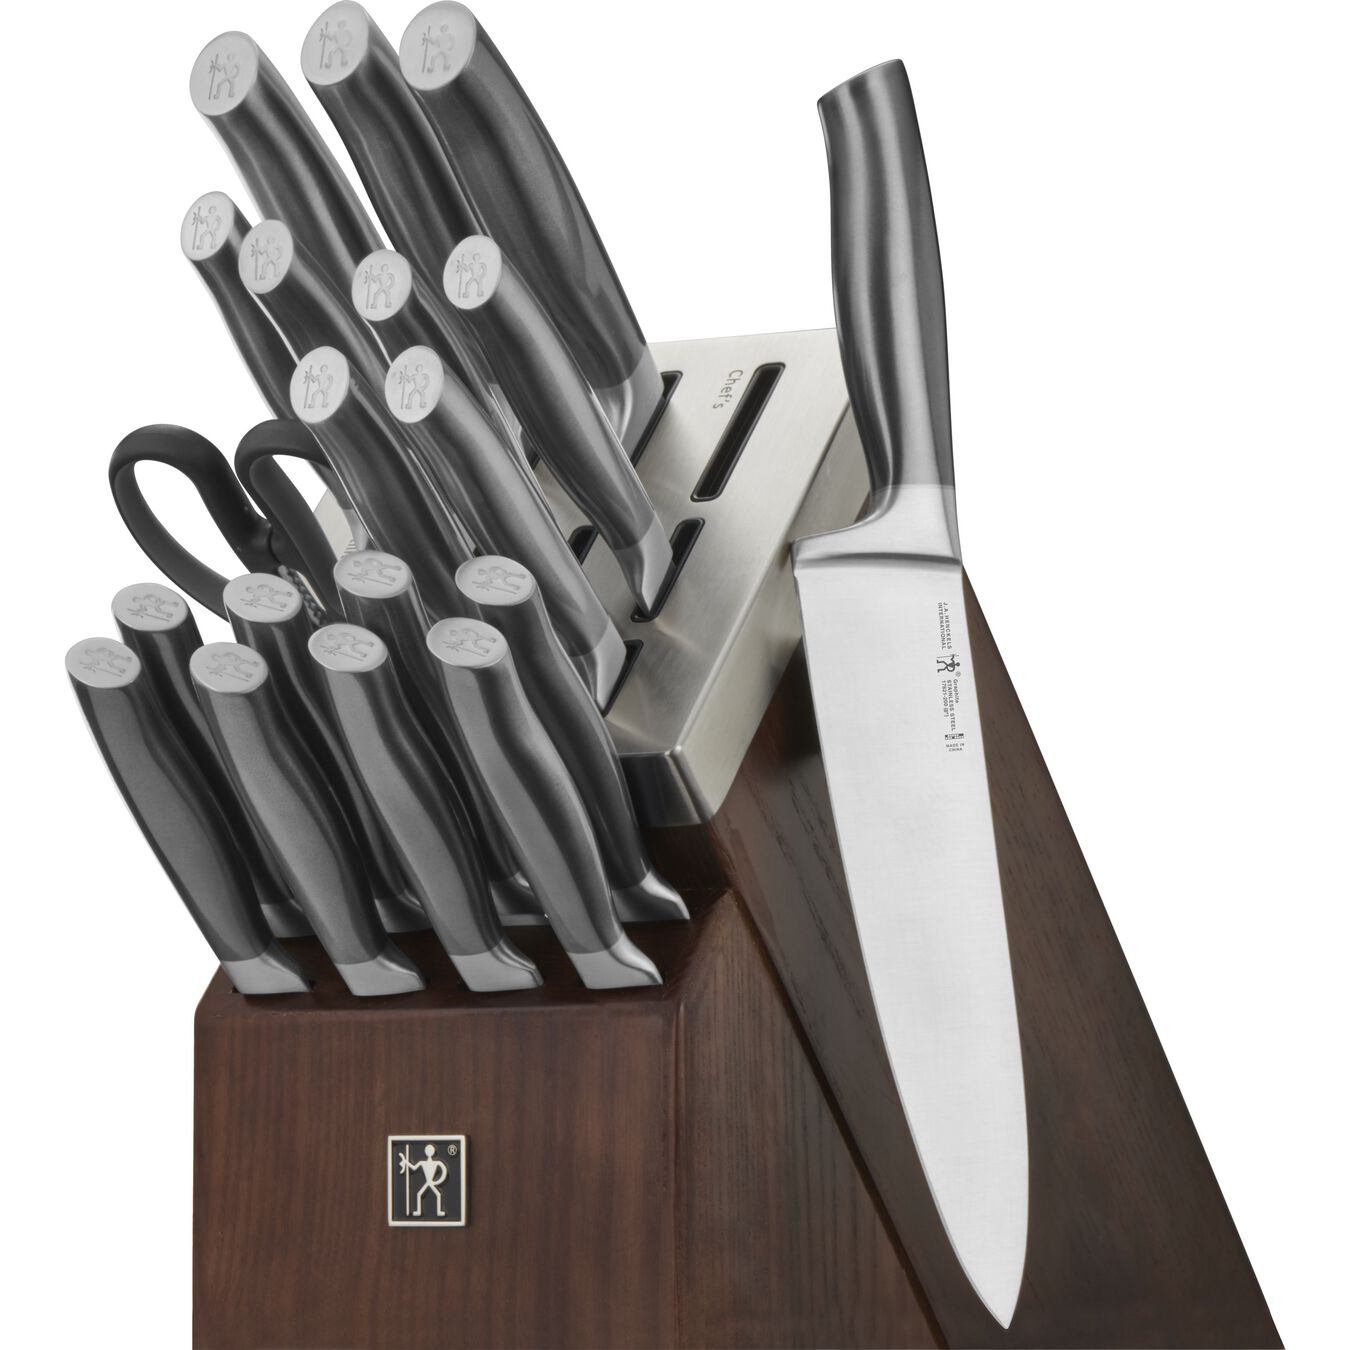 Buy Henckels Refined Knife block set